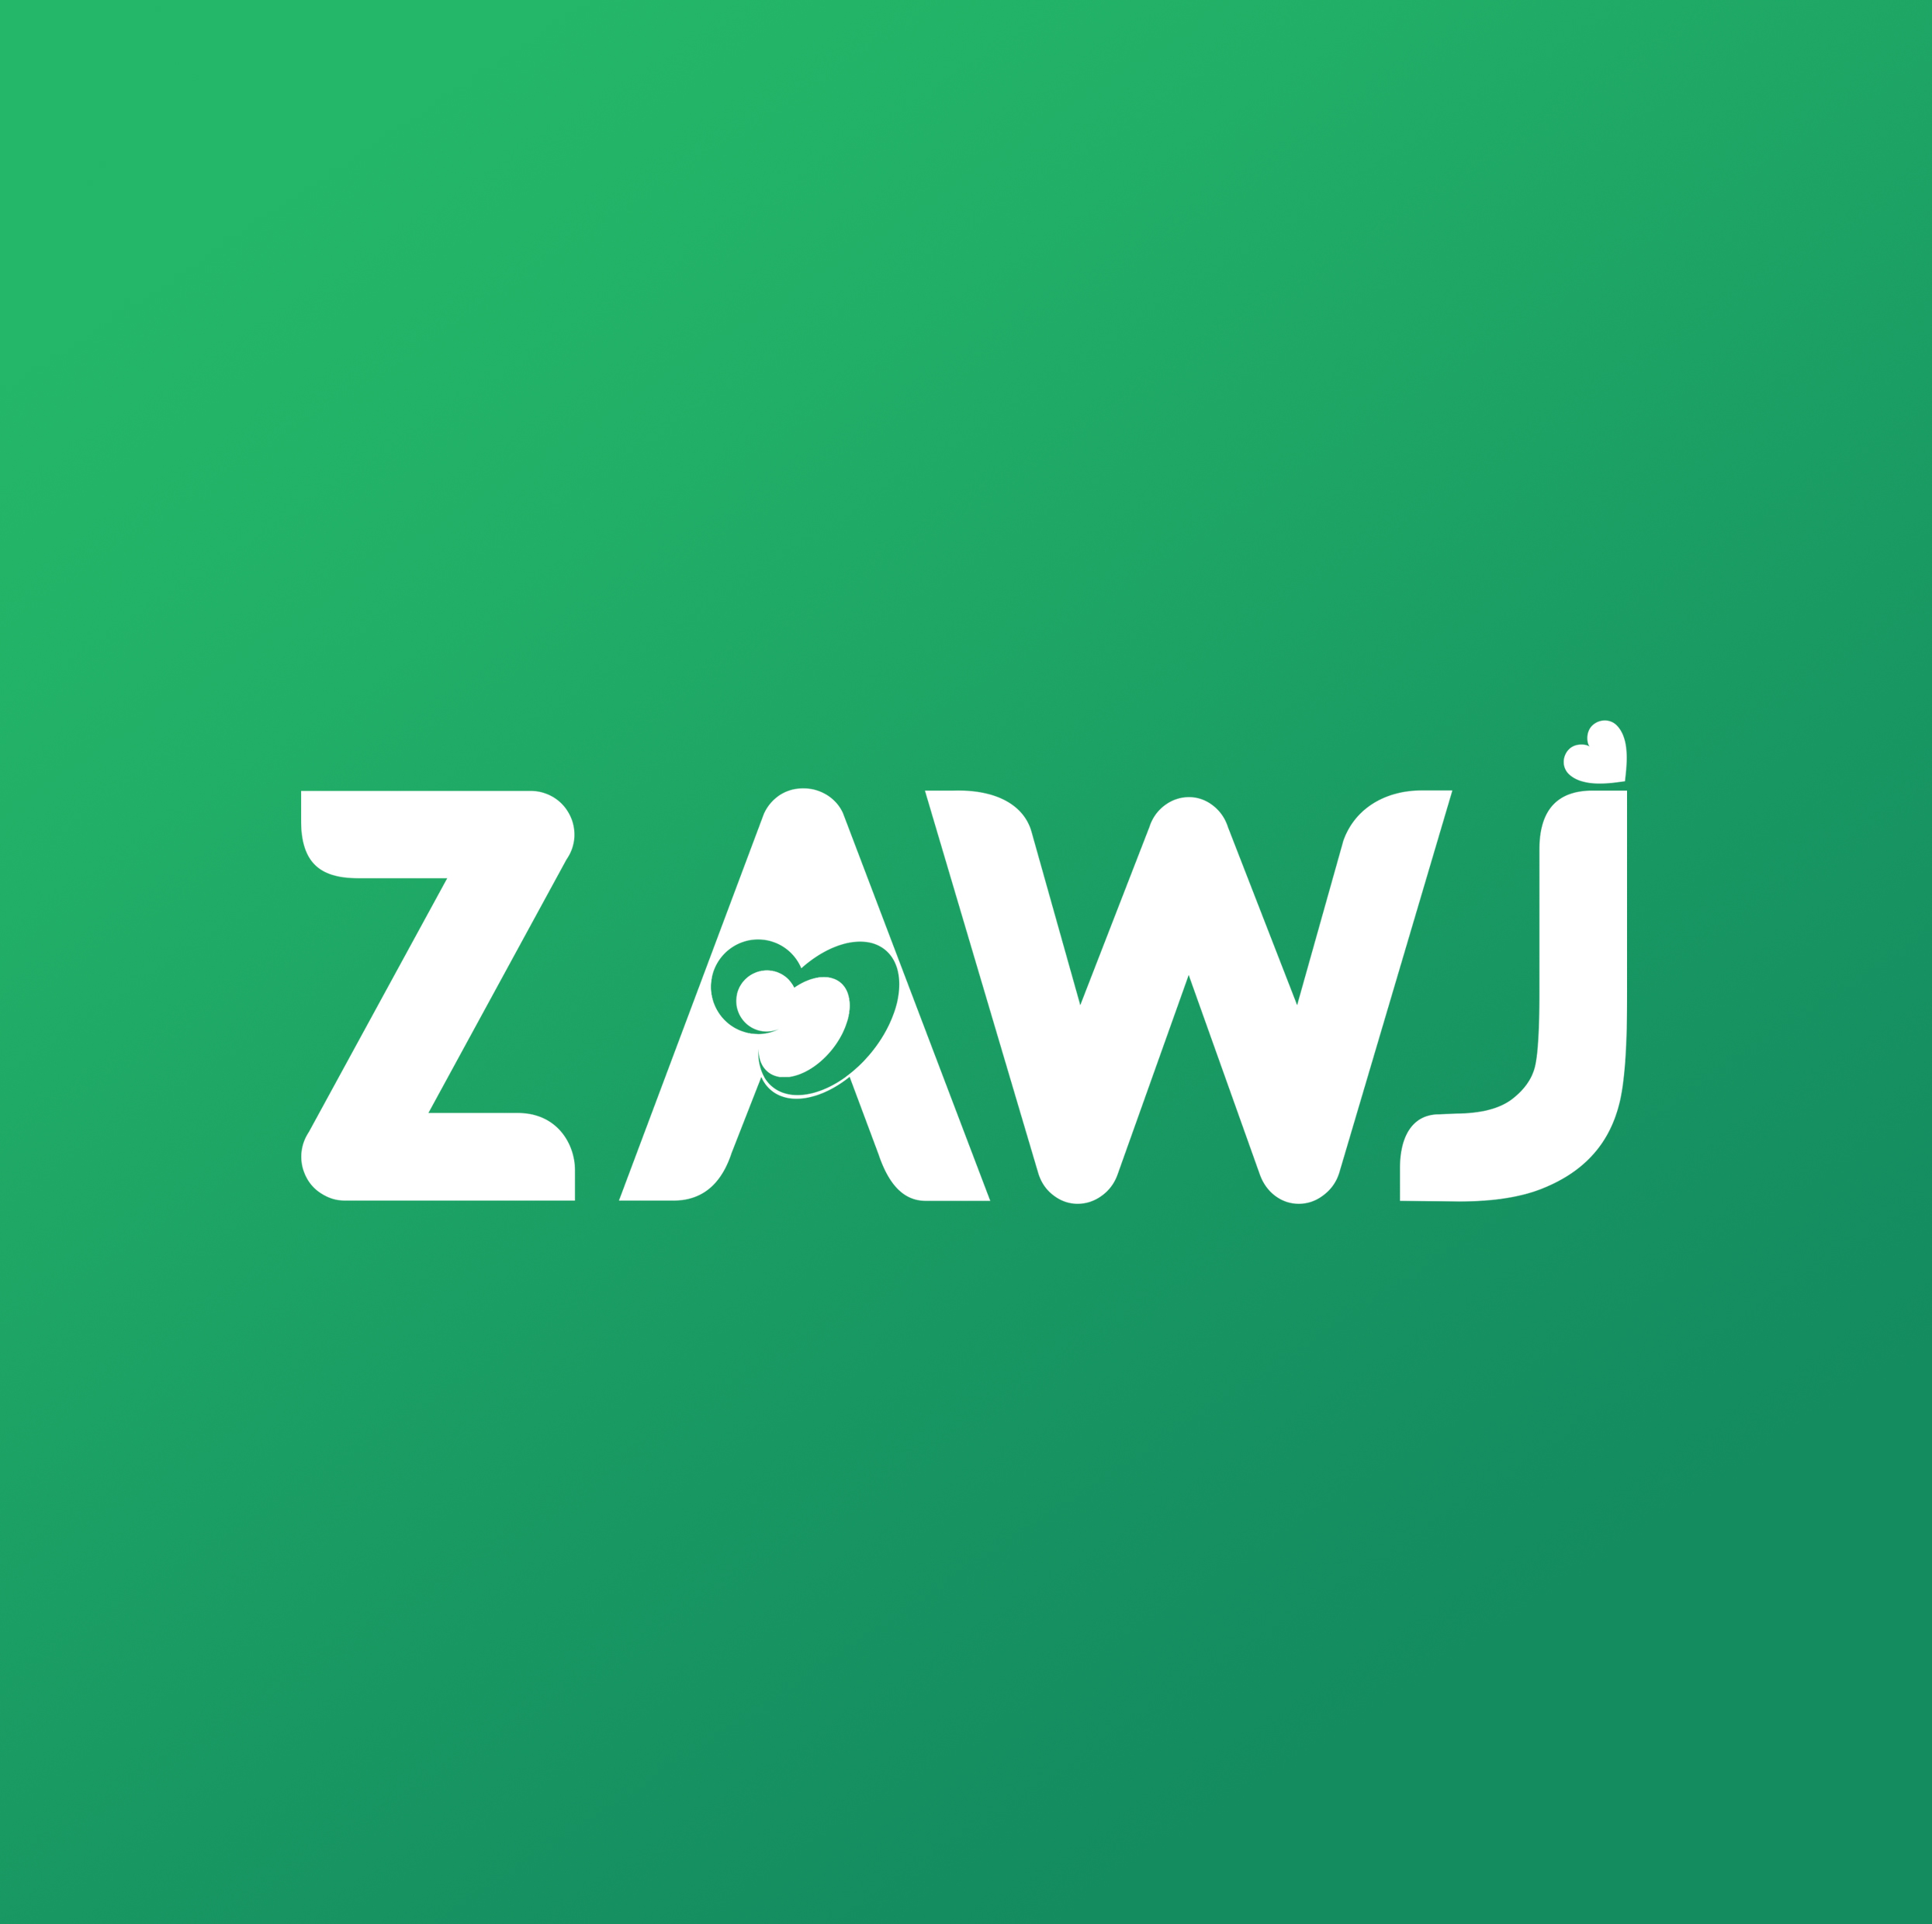 (c) Zawj.com